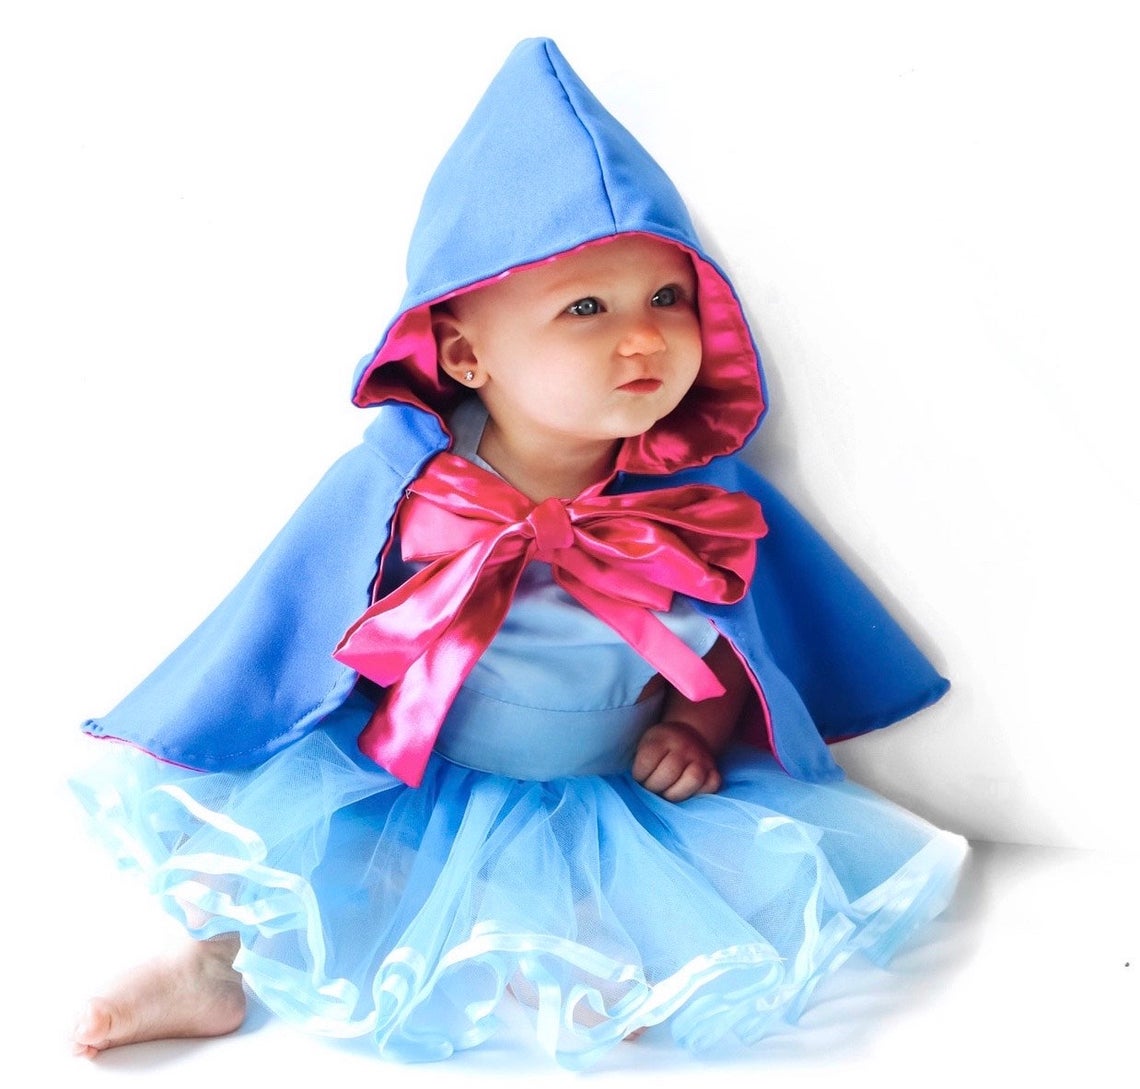 cinderella fairy godmother costume